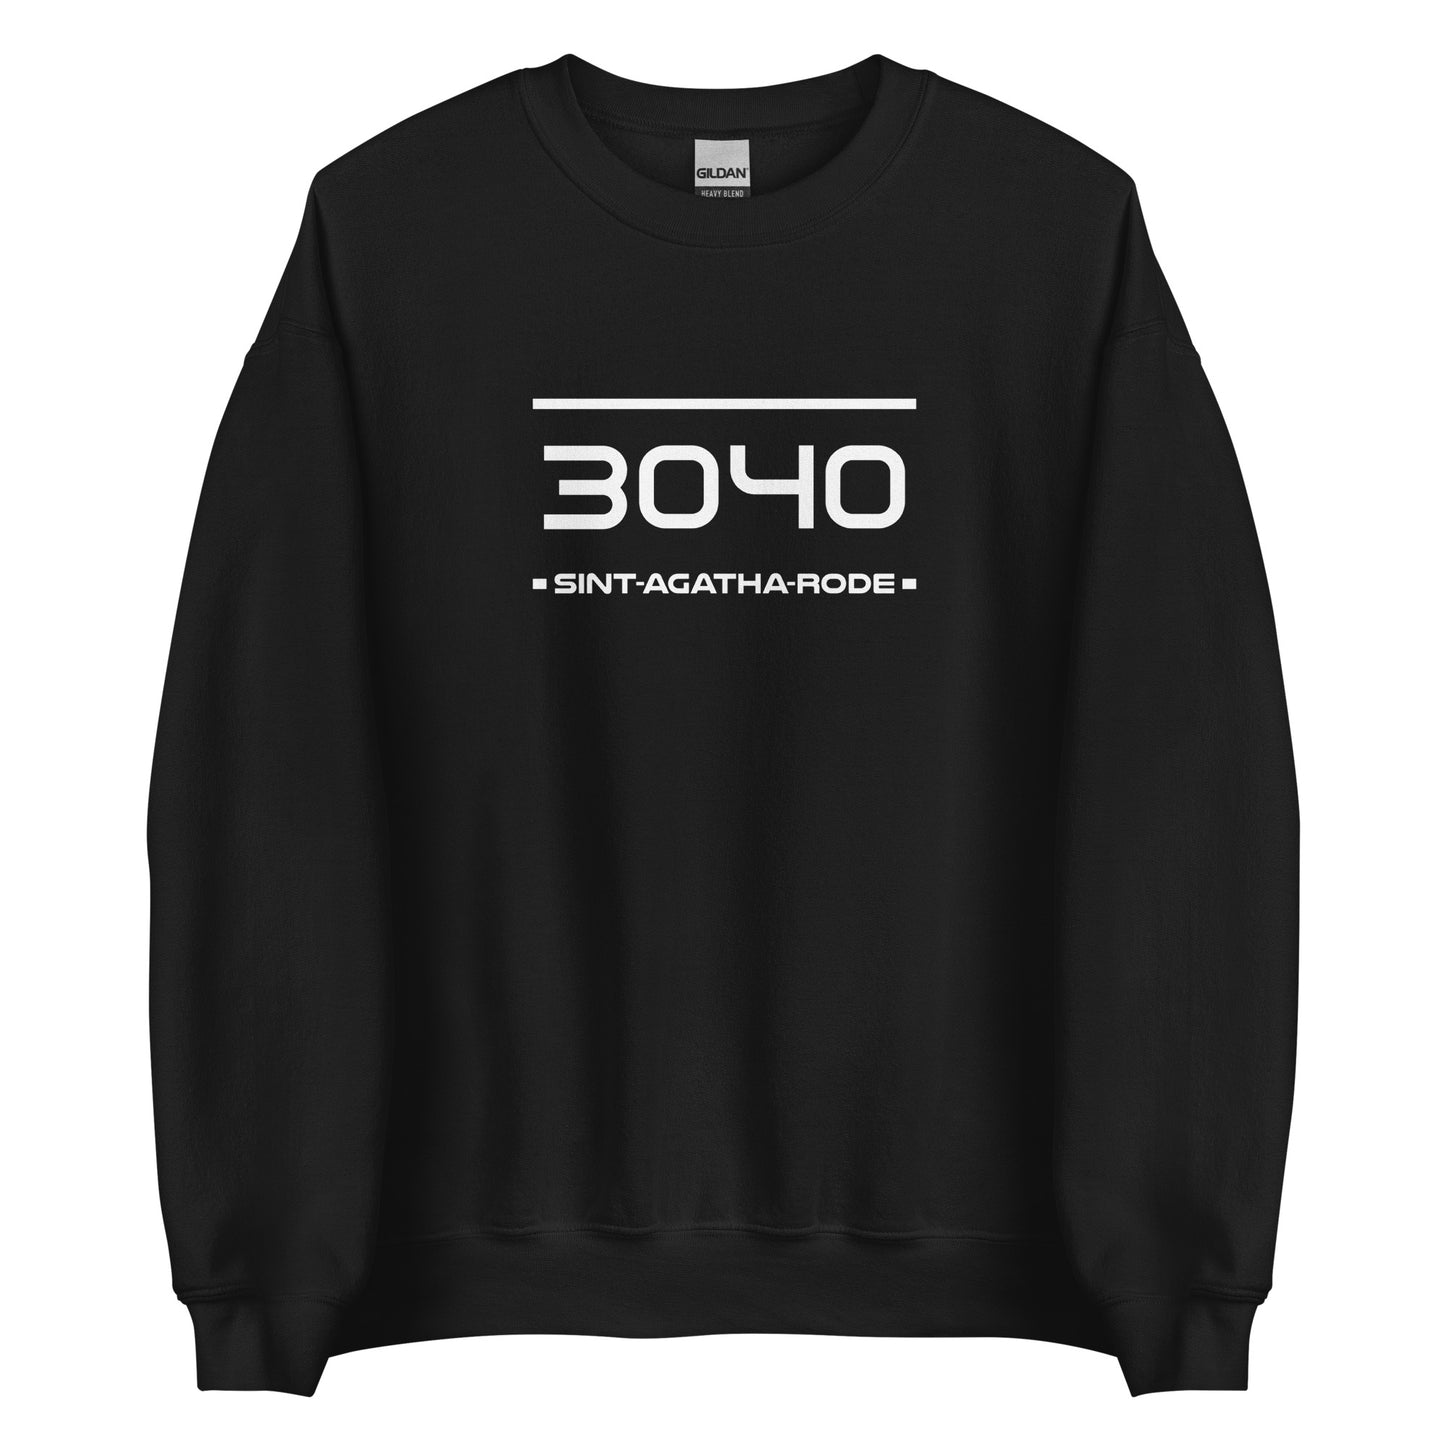 Sweater - 3040 - Sint-Agatha-Rode (M/V)